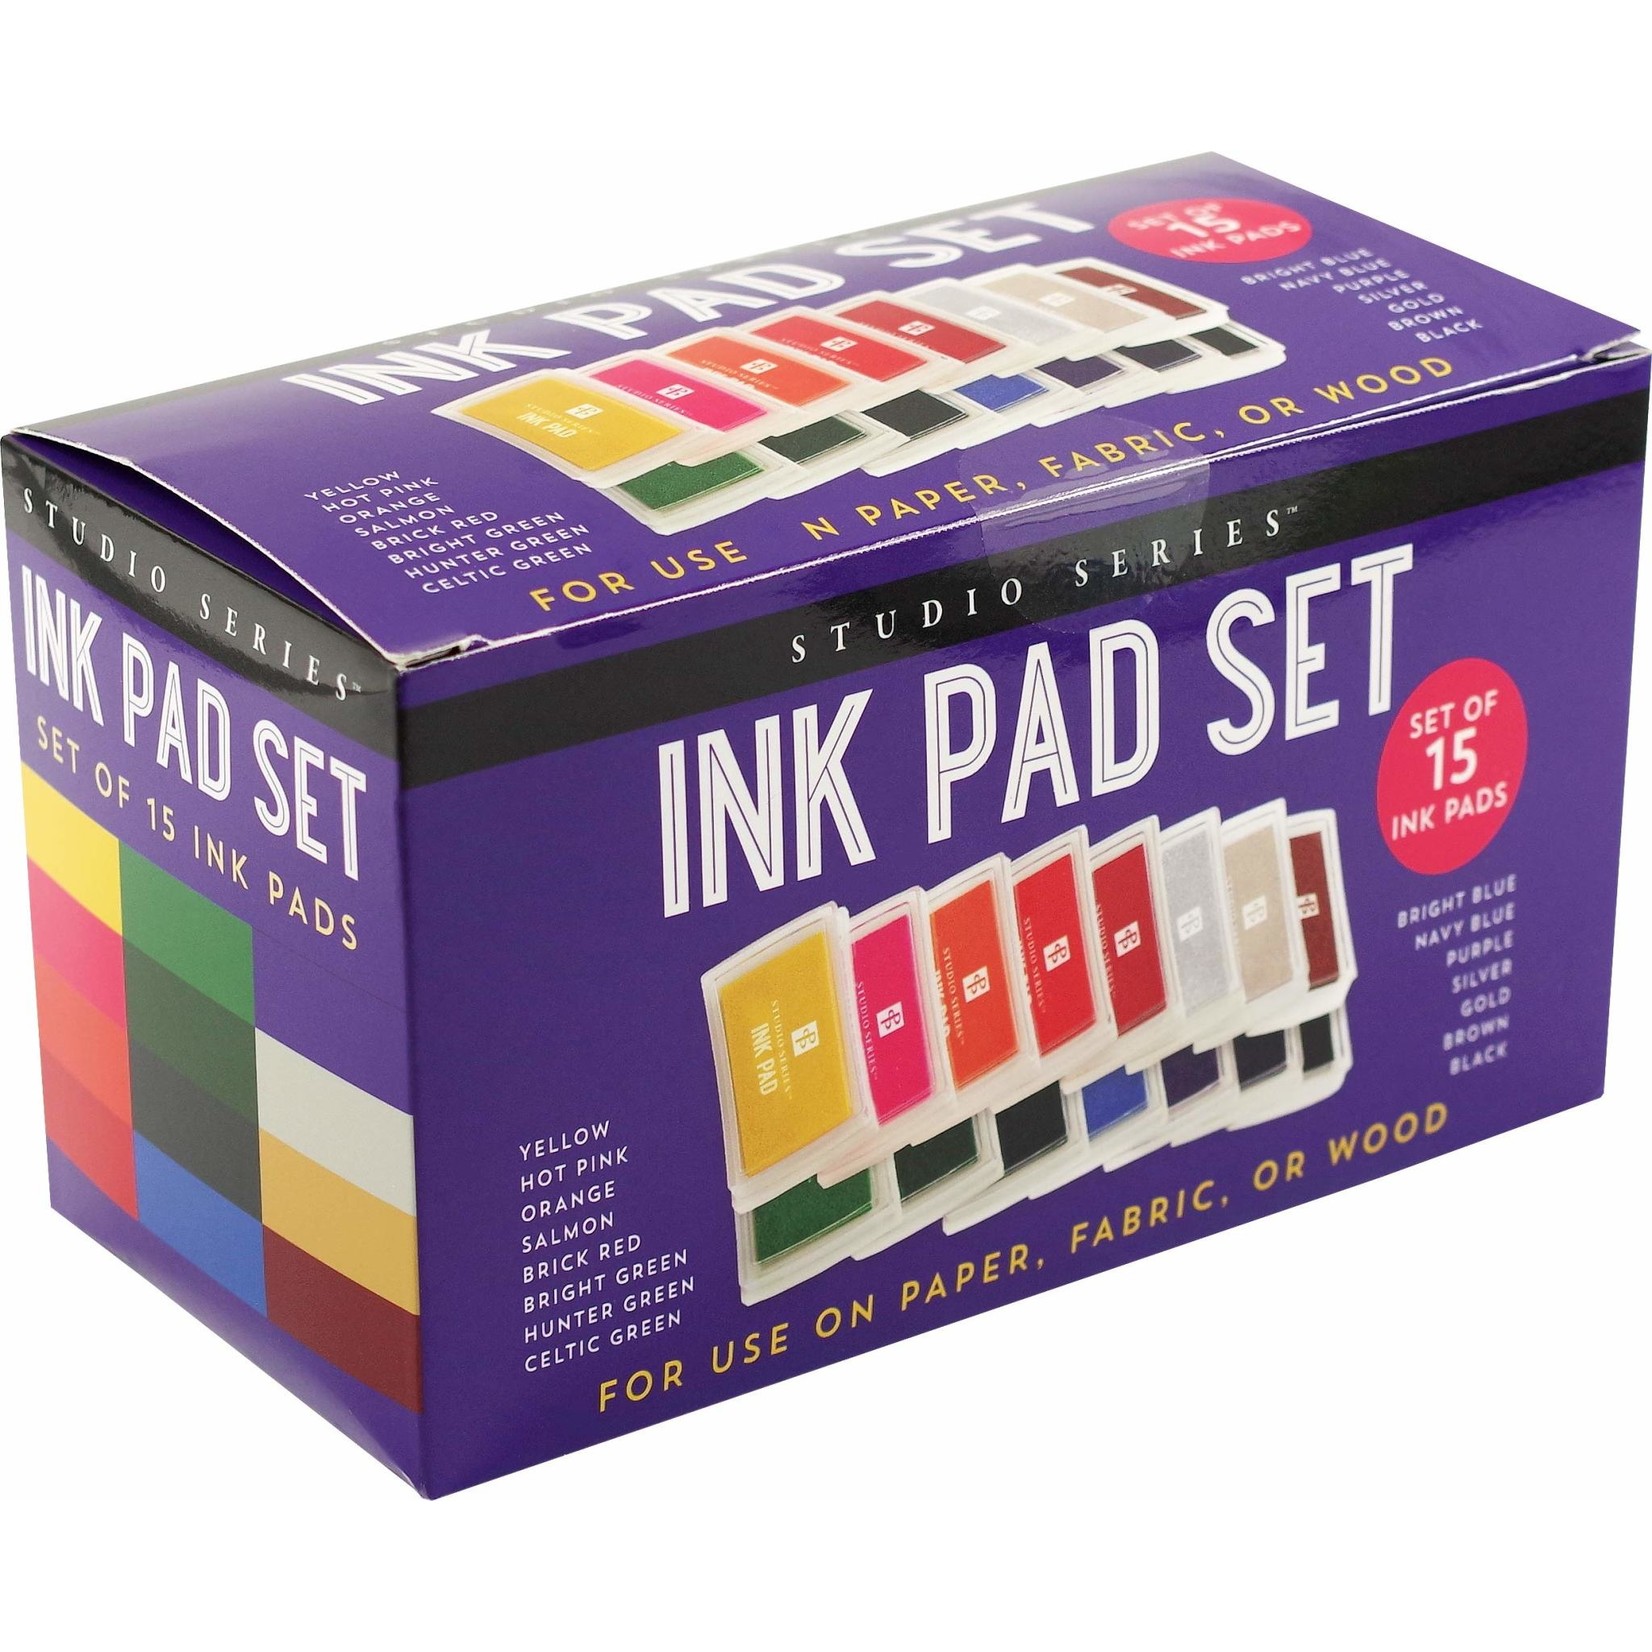 Peter Pauper Press PPsp - Studio Series Ink Pad Set (15 colors)